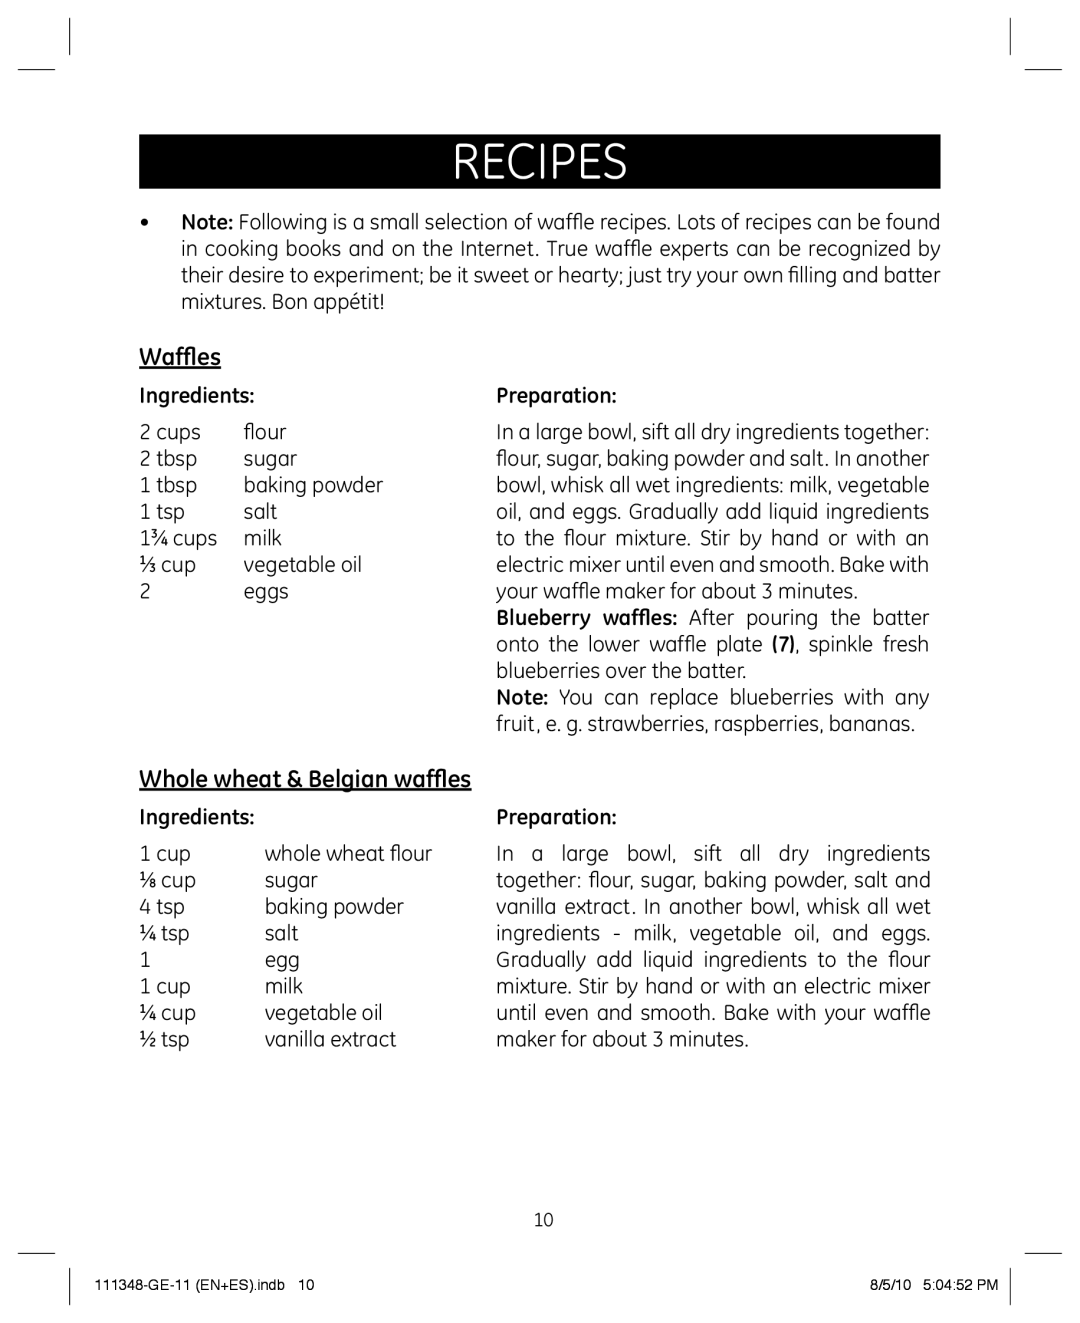 GE 898678 manual Recipes, Ingredients, Preparation, Waffles, Whole wheat & Belgian waffles 